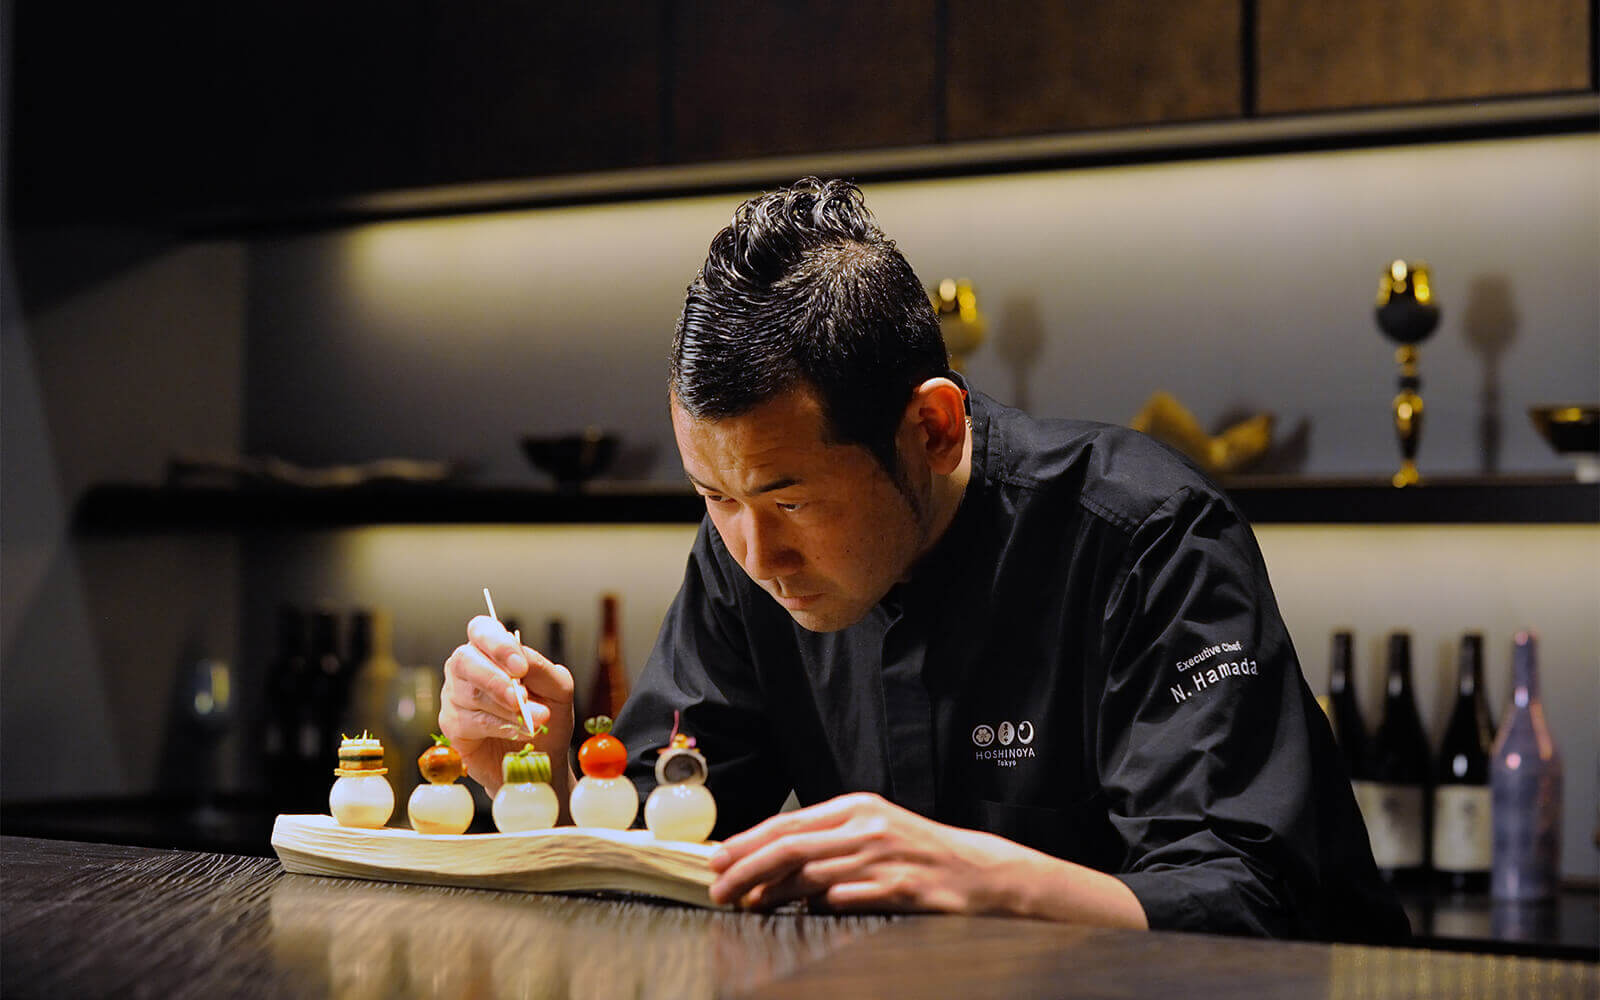 Chef Hamada displaying beautiful artwork of the culinary world.